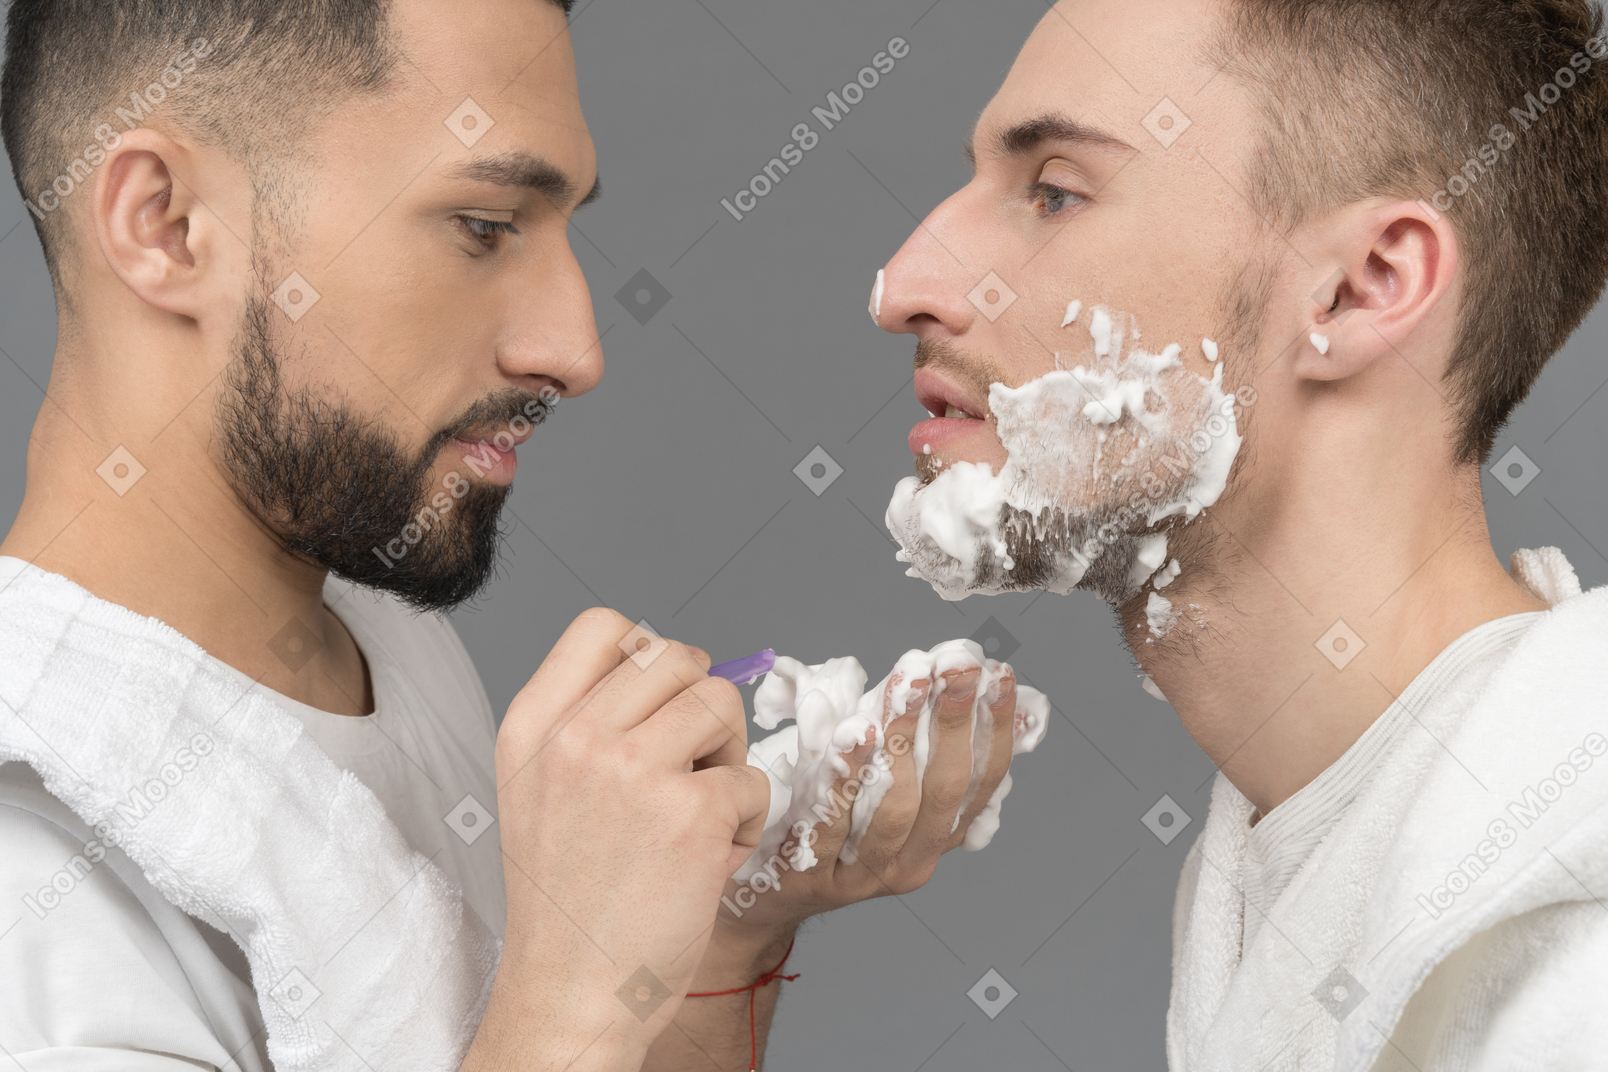 Close-up of a man shaving his boyfriend's face